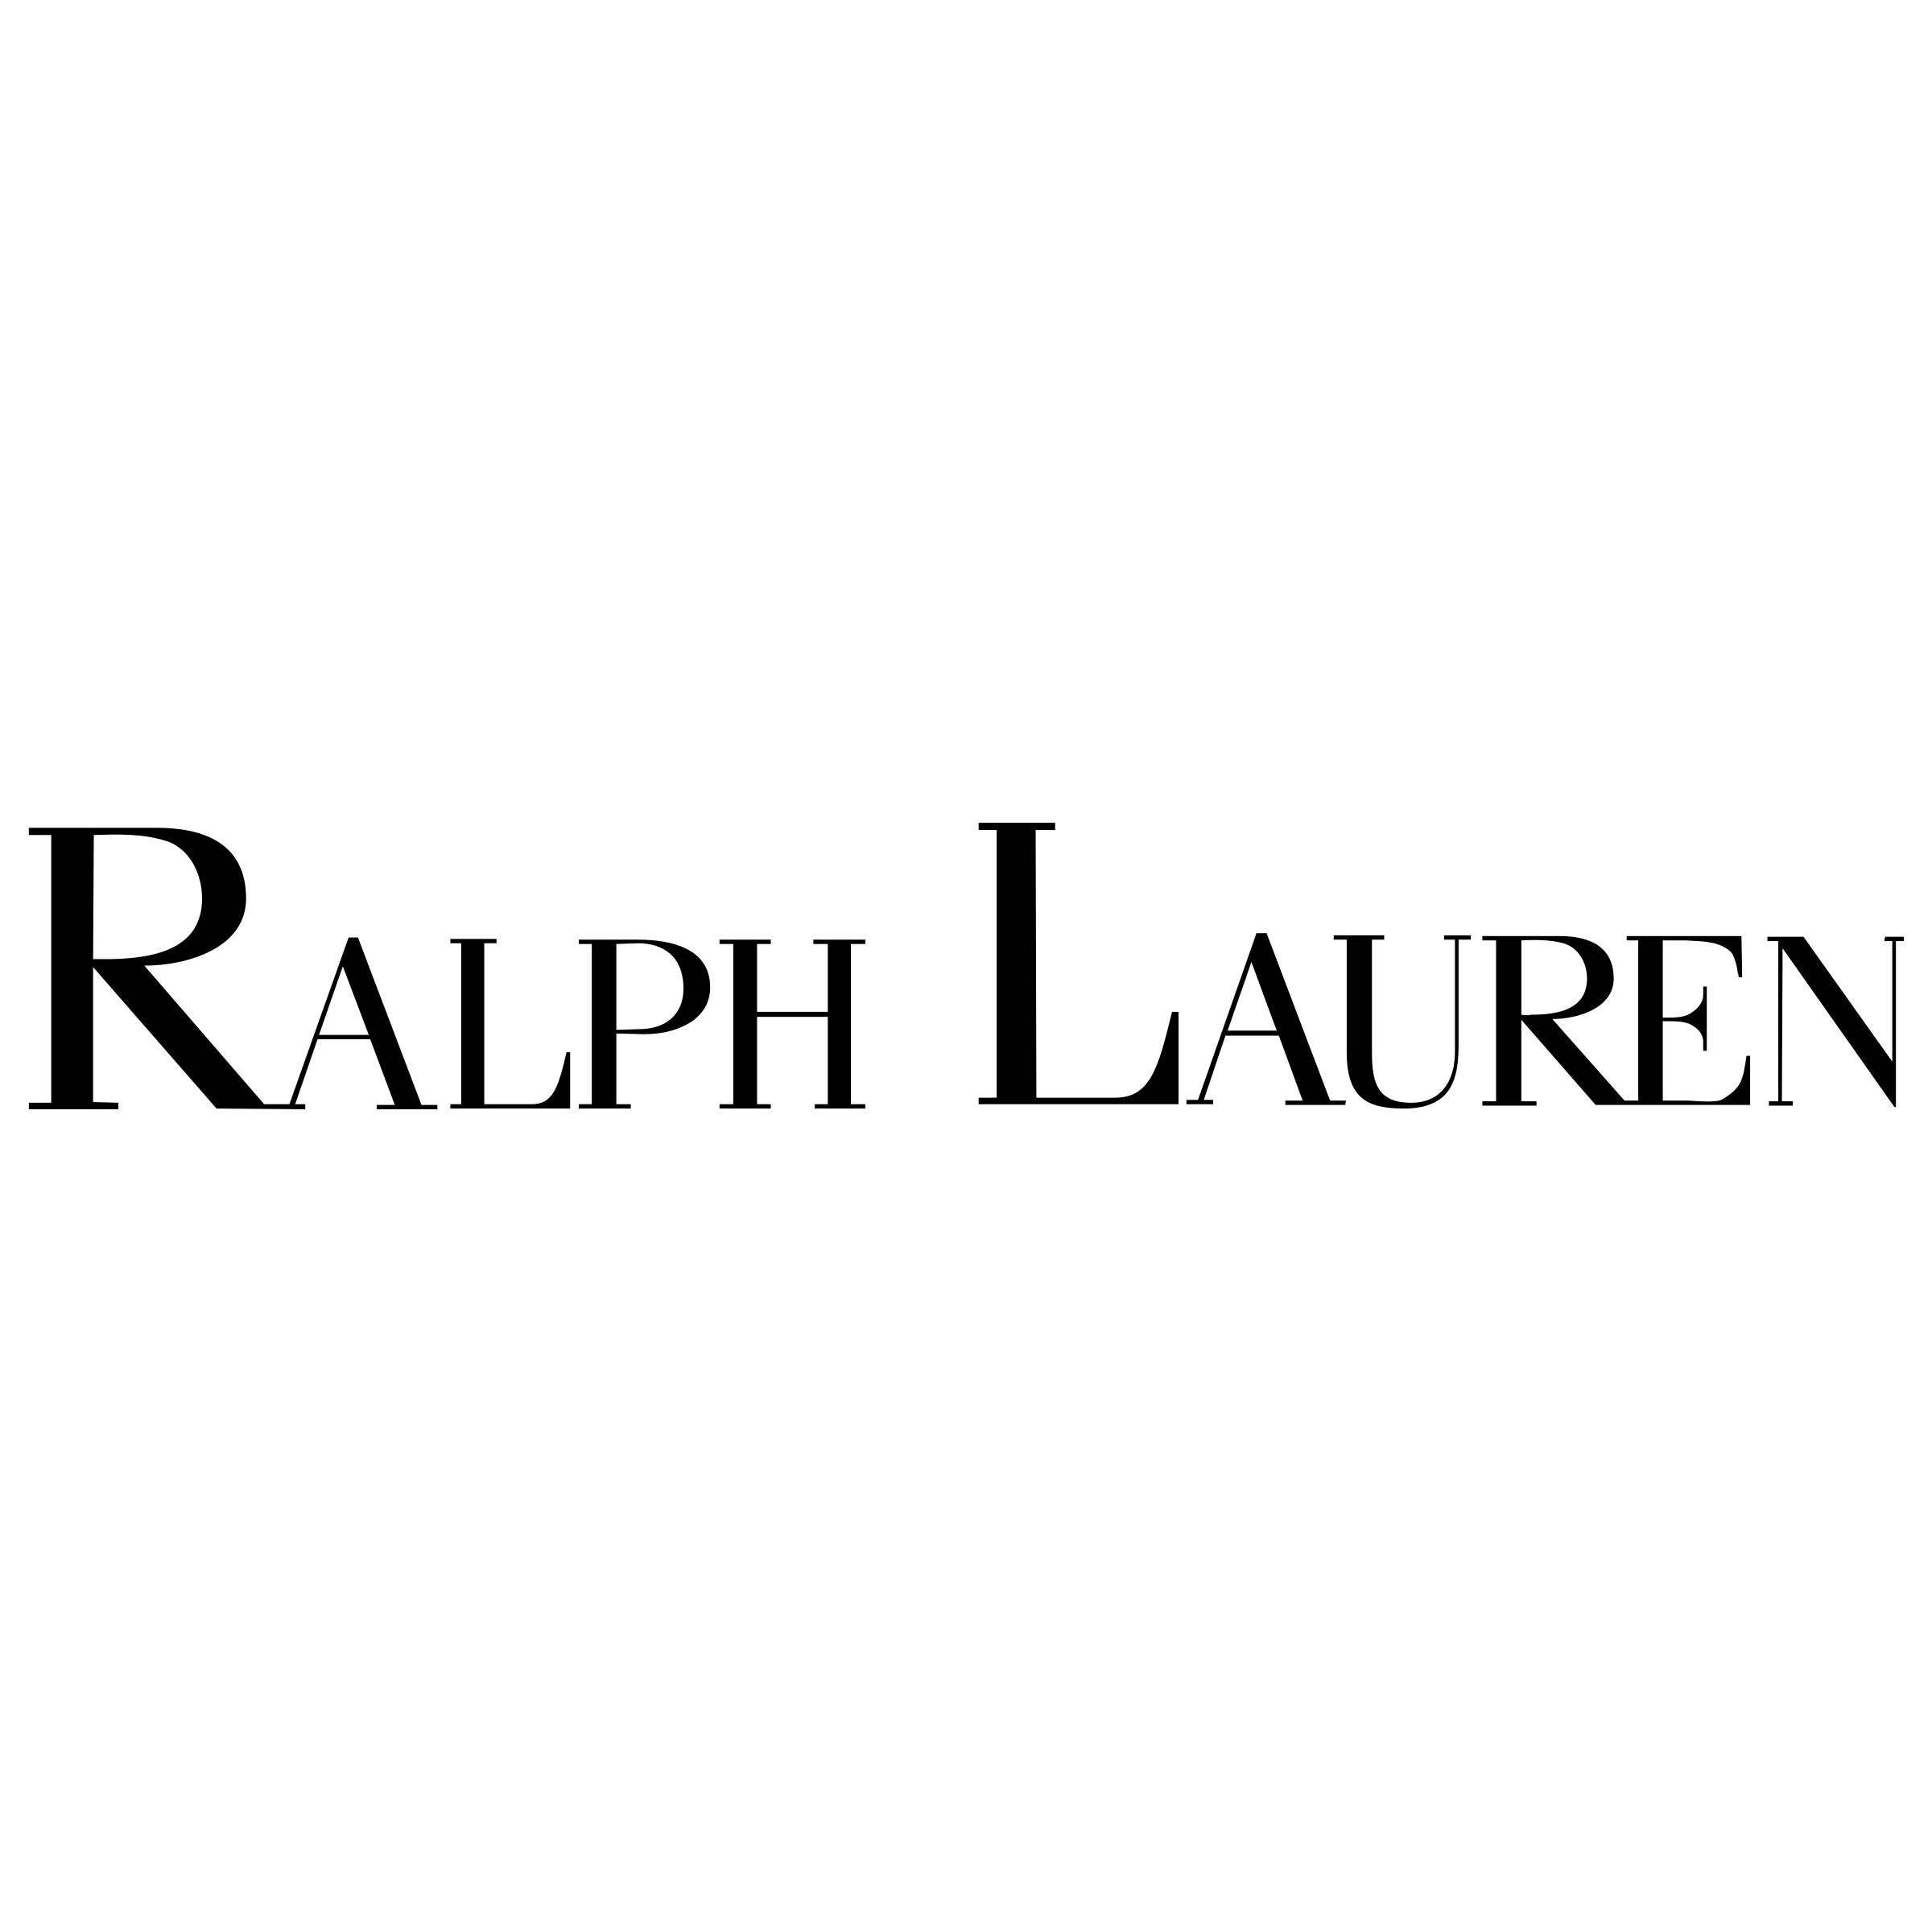 Ralph Lauren Logo - Ralph Lauren Logo PNG Transparent & SVG Vector